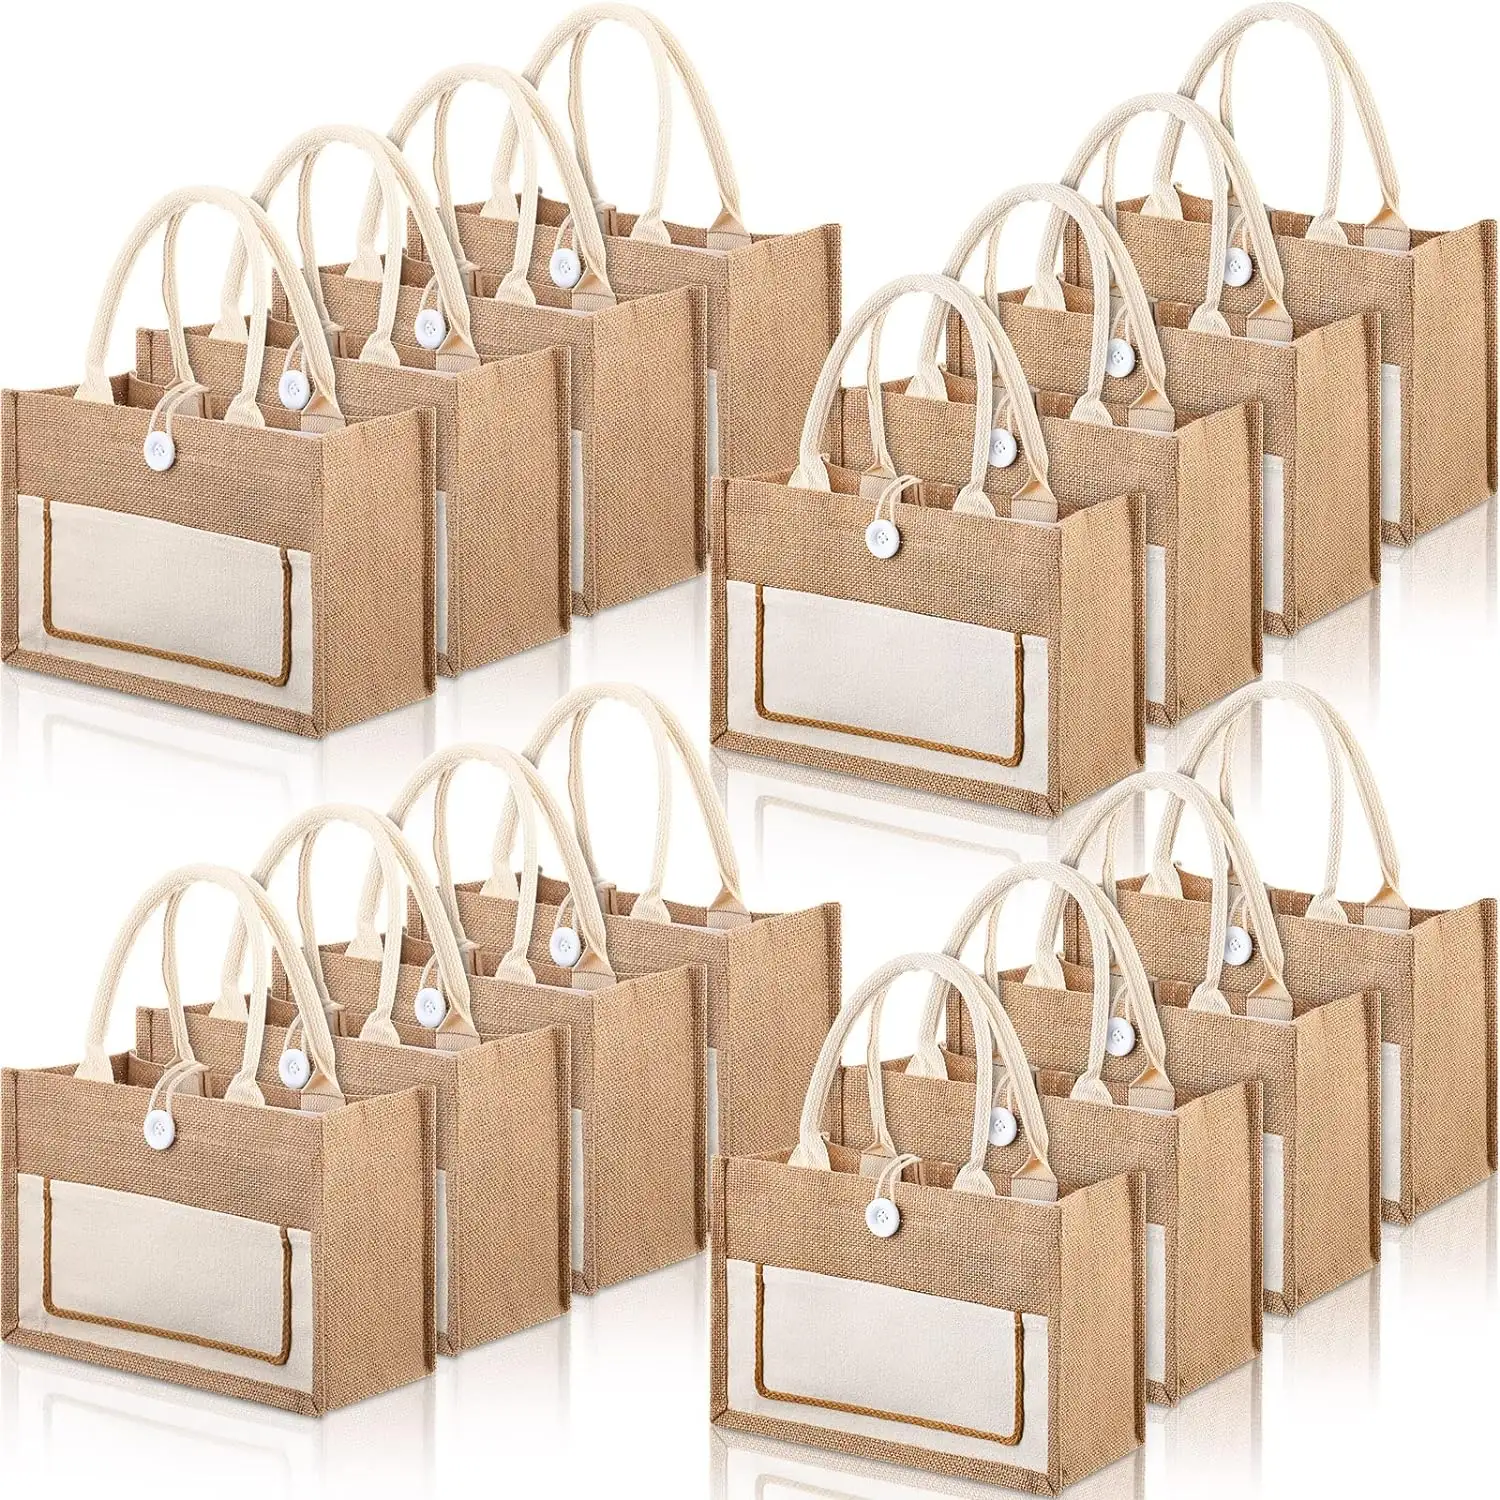 Wholesale Plain Custom Printed Large Natural Eco Friendly Burlap Jute Shopping Tote Beach Bag With Logos